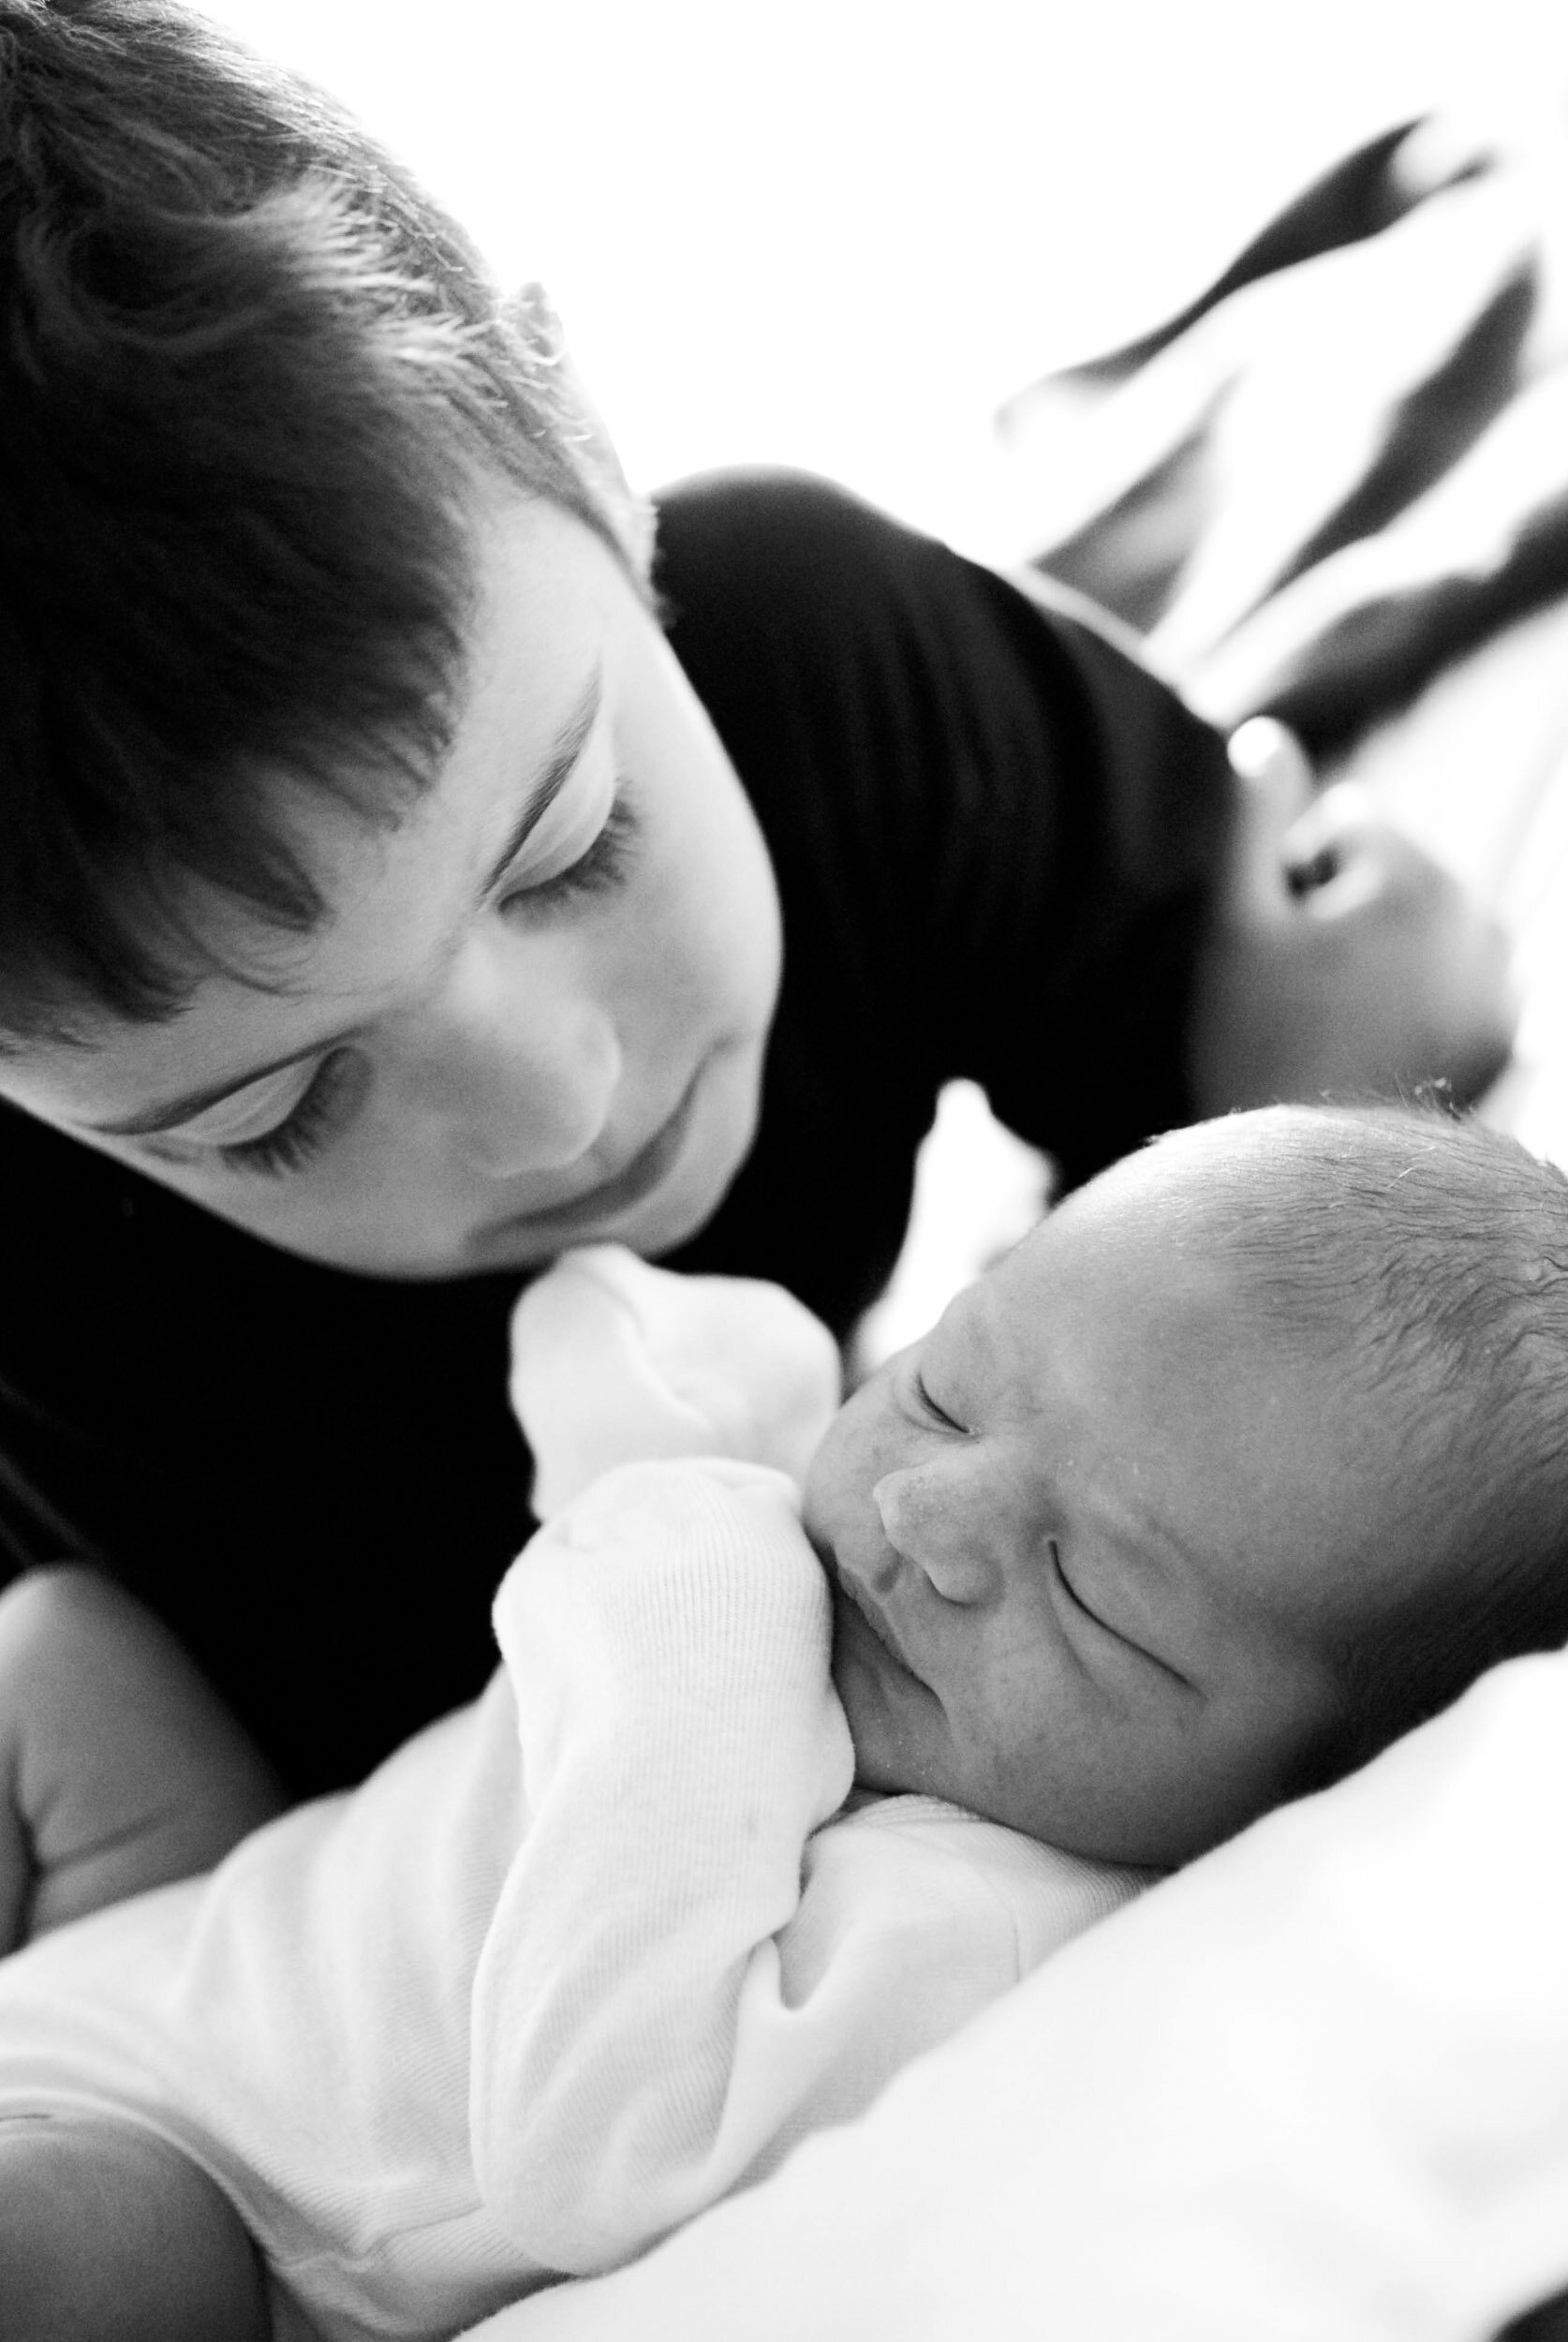 Sibling and newborn baby at Maine homebirth